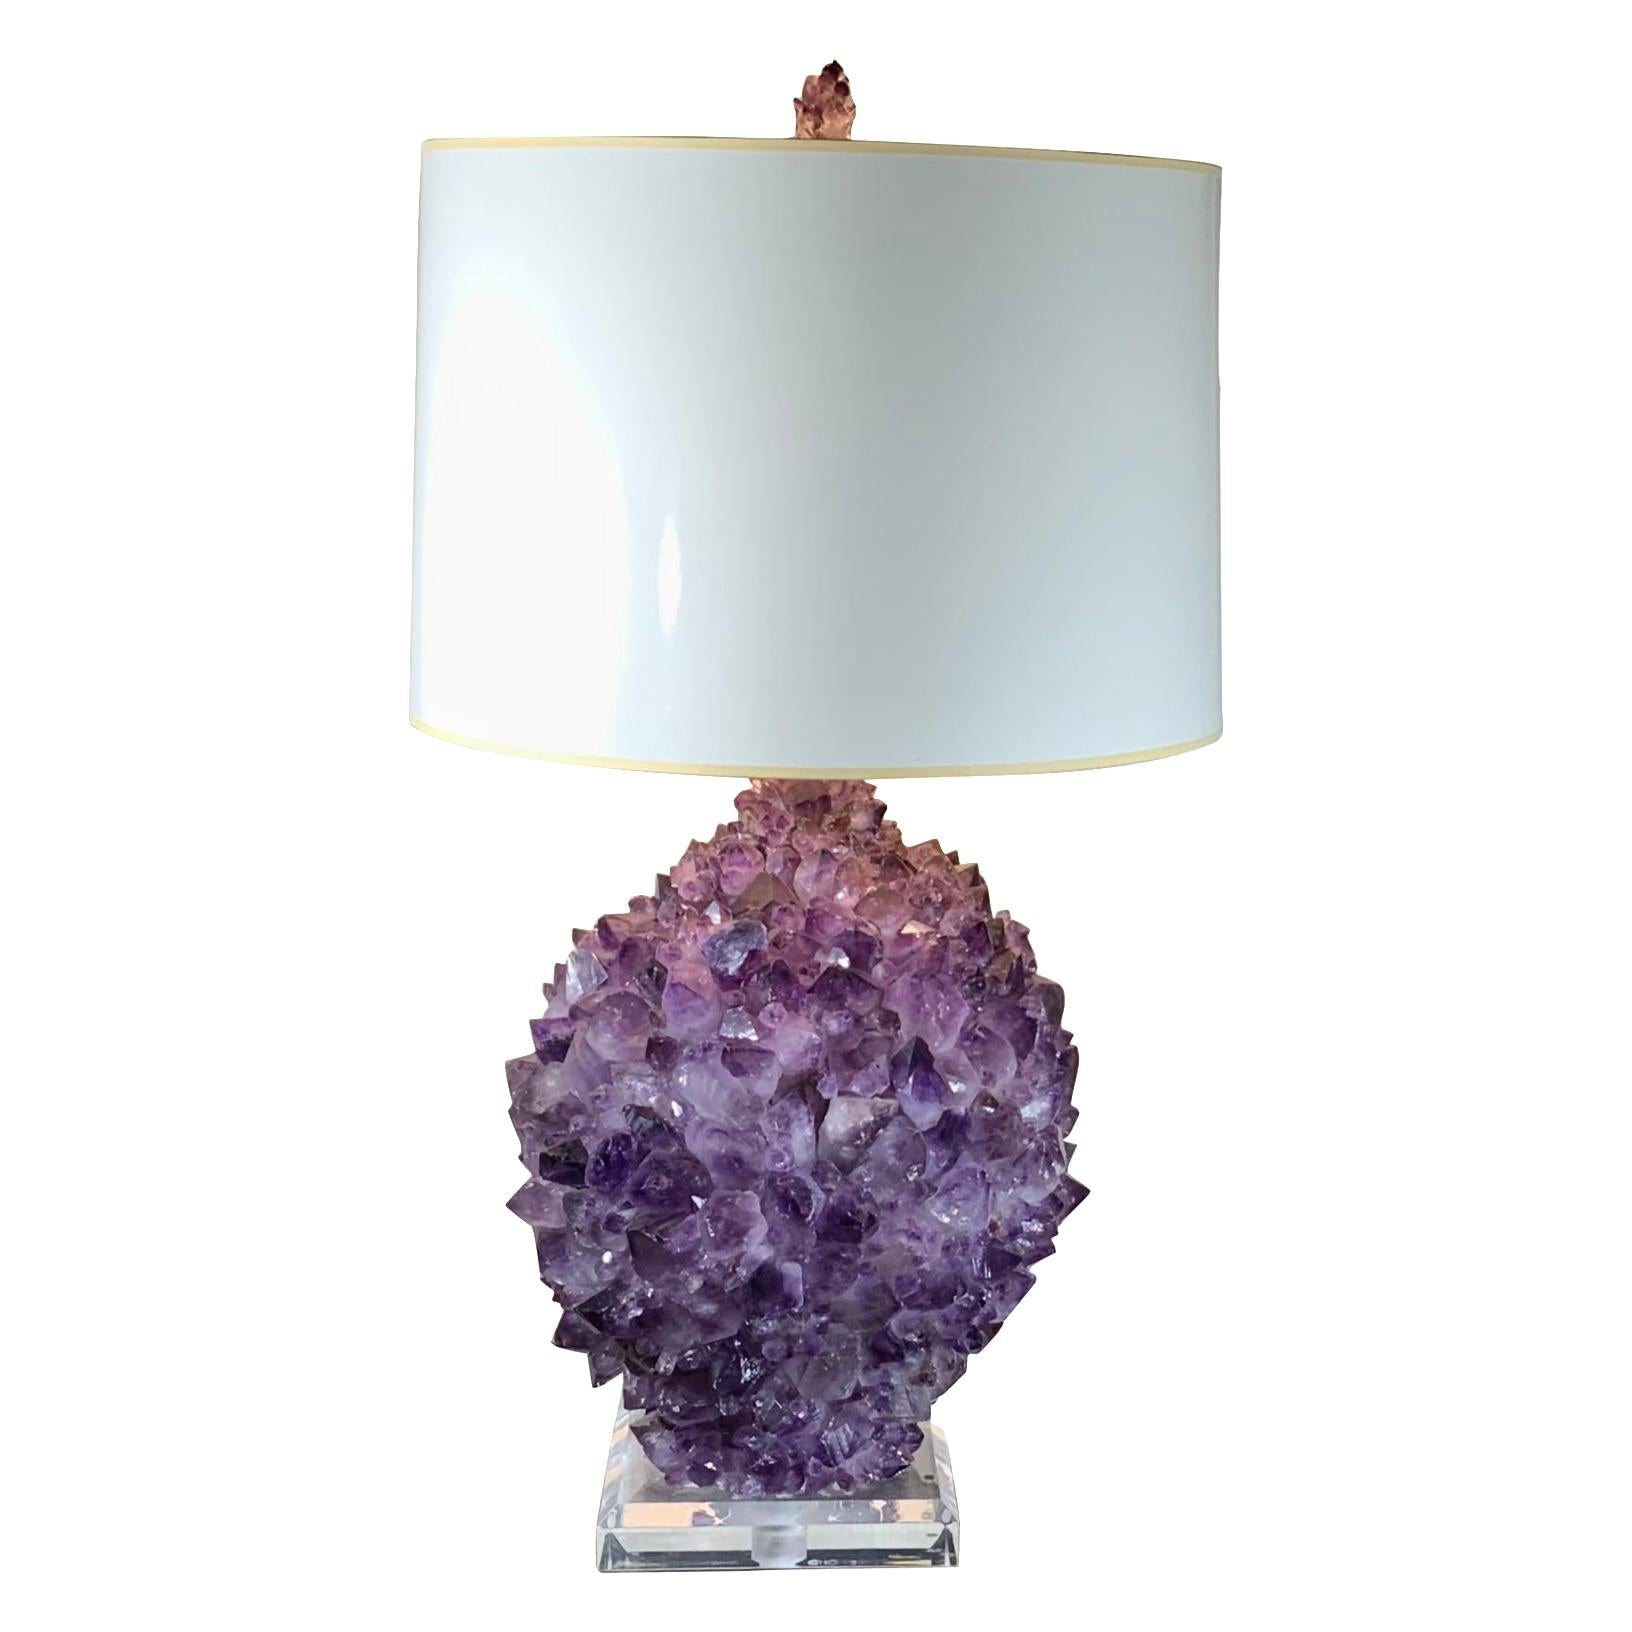 Single Amethyst Rock Crystal Table Lamp